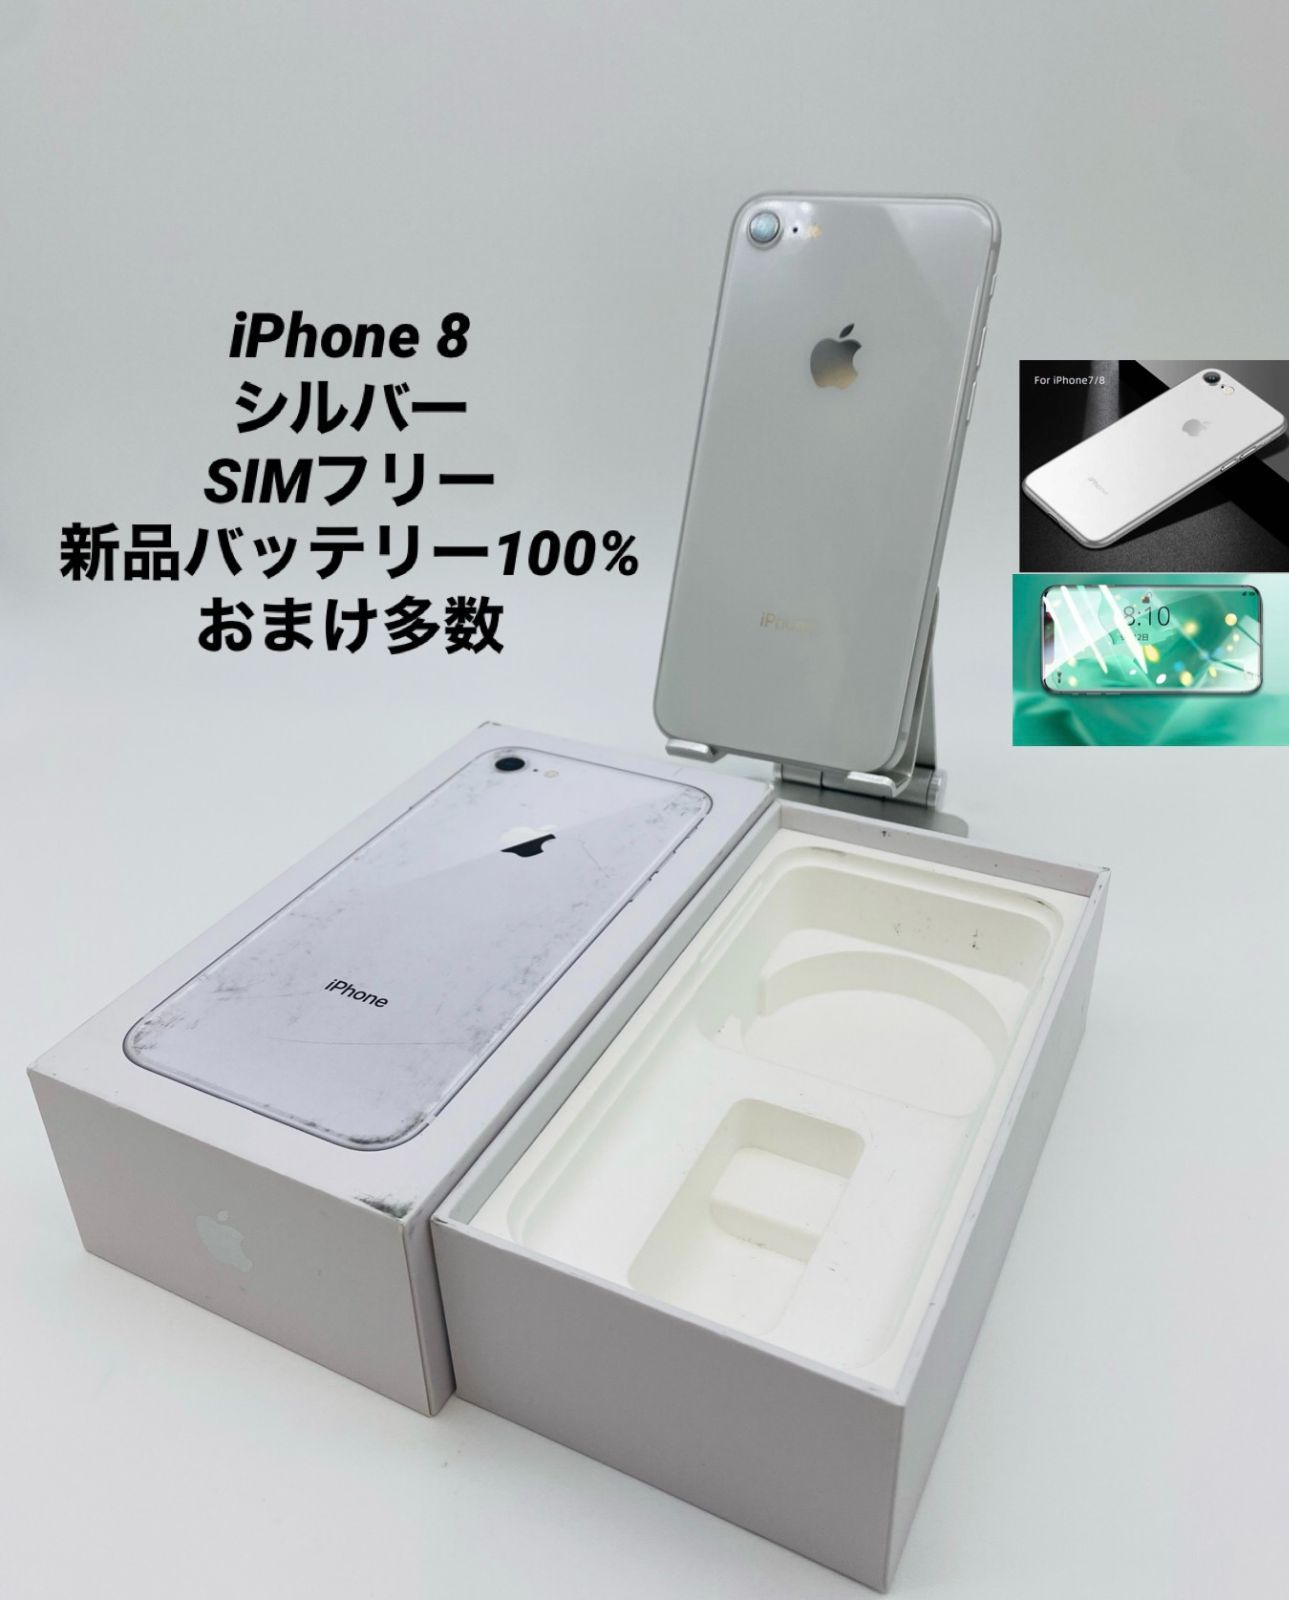 iPhone8 64GB シルバー - 通販 - gofukuyasan.com